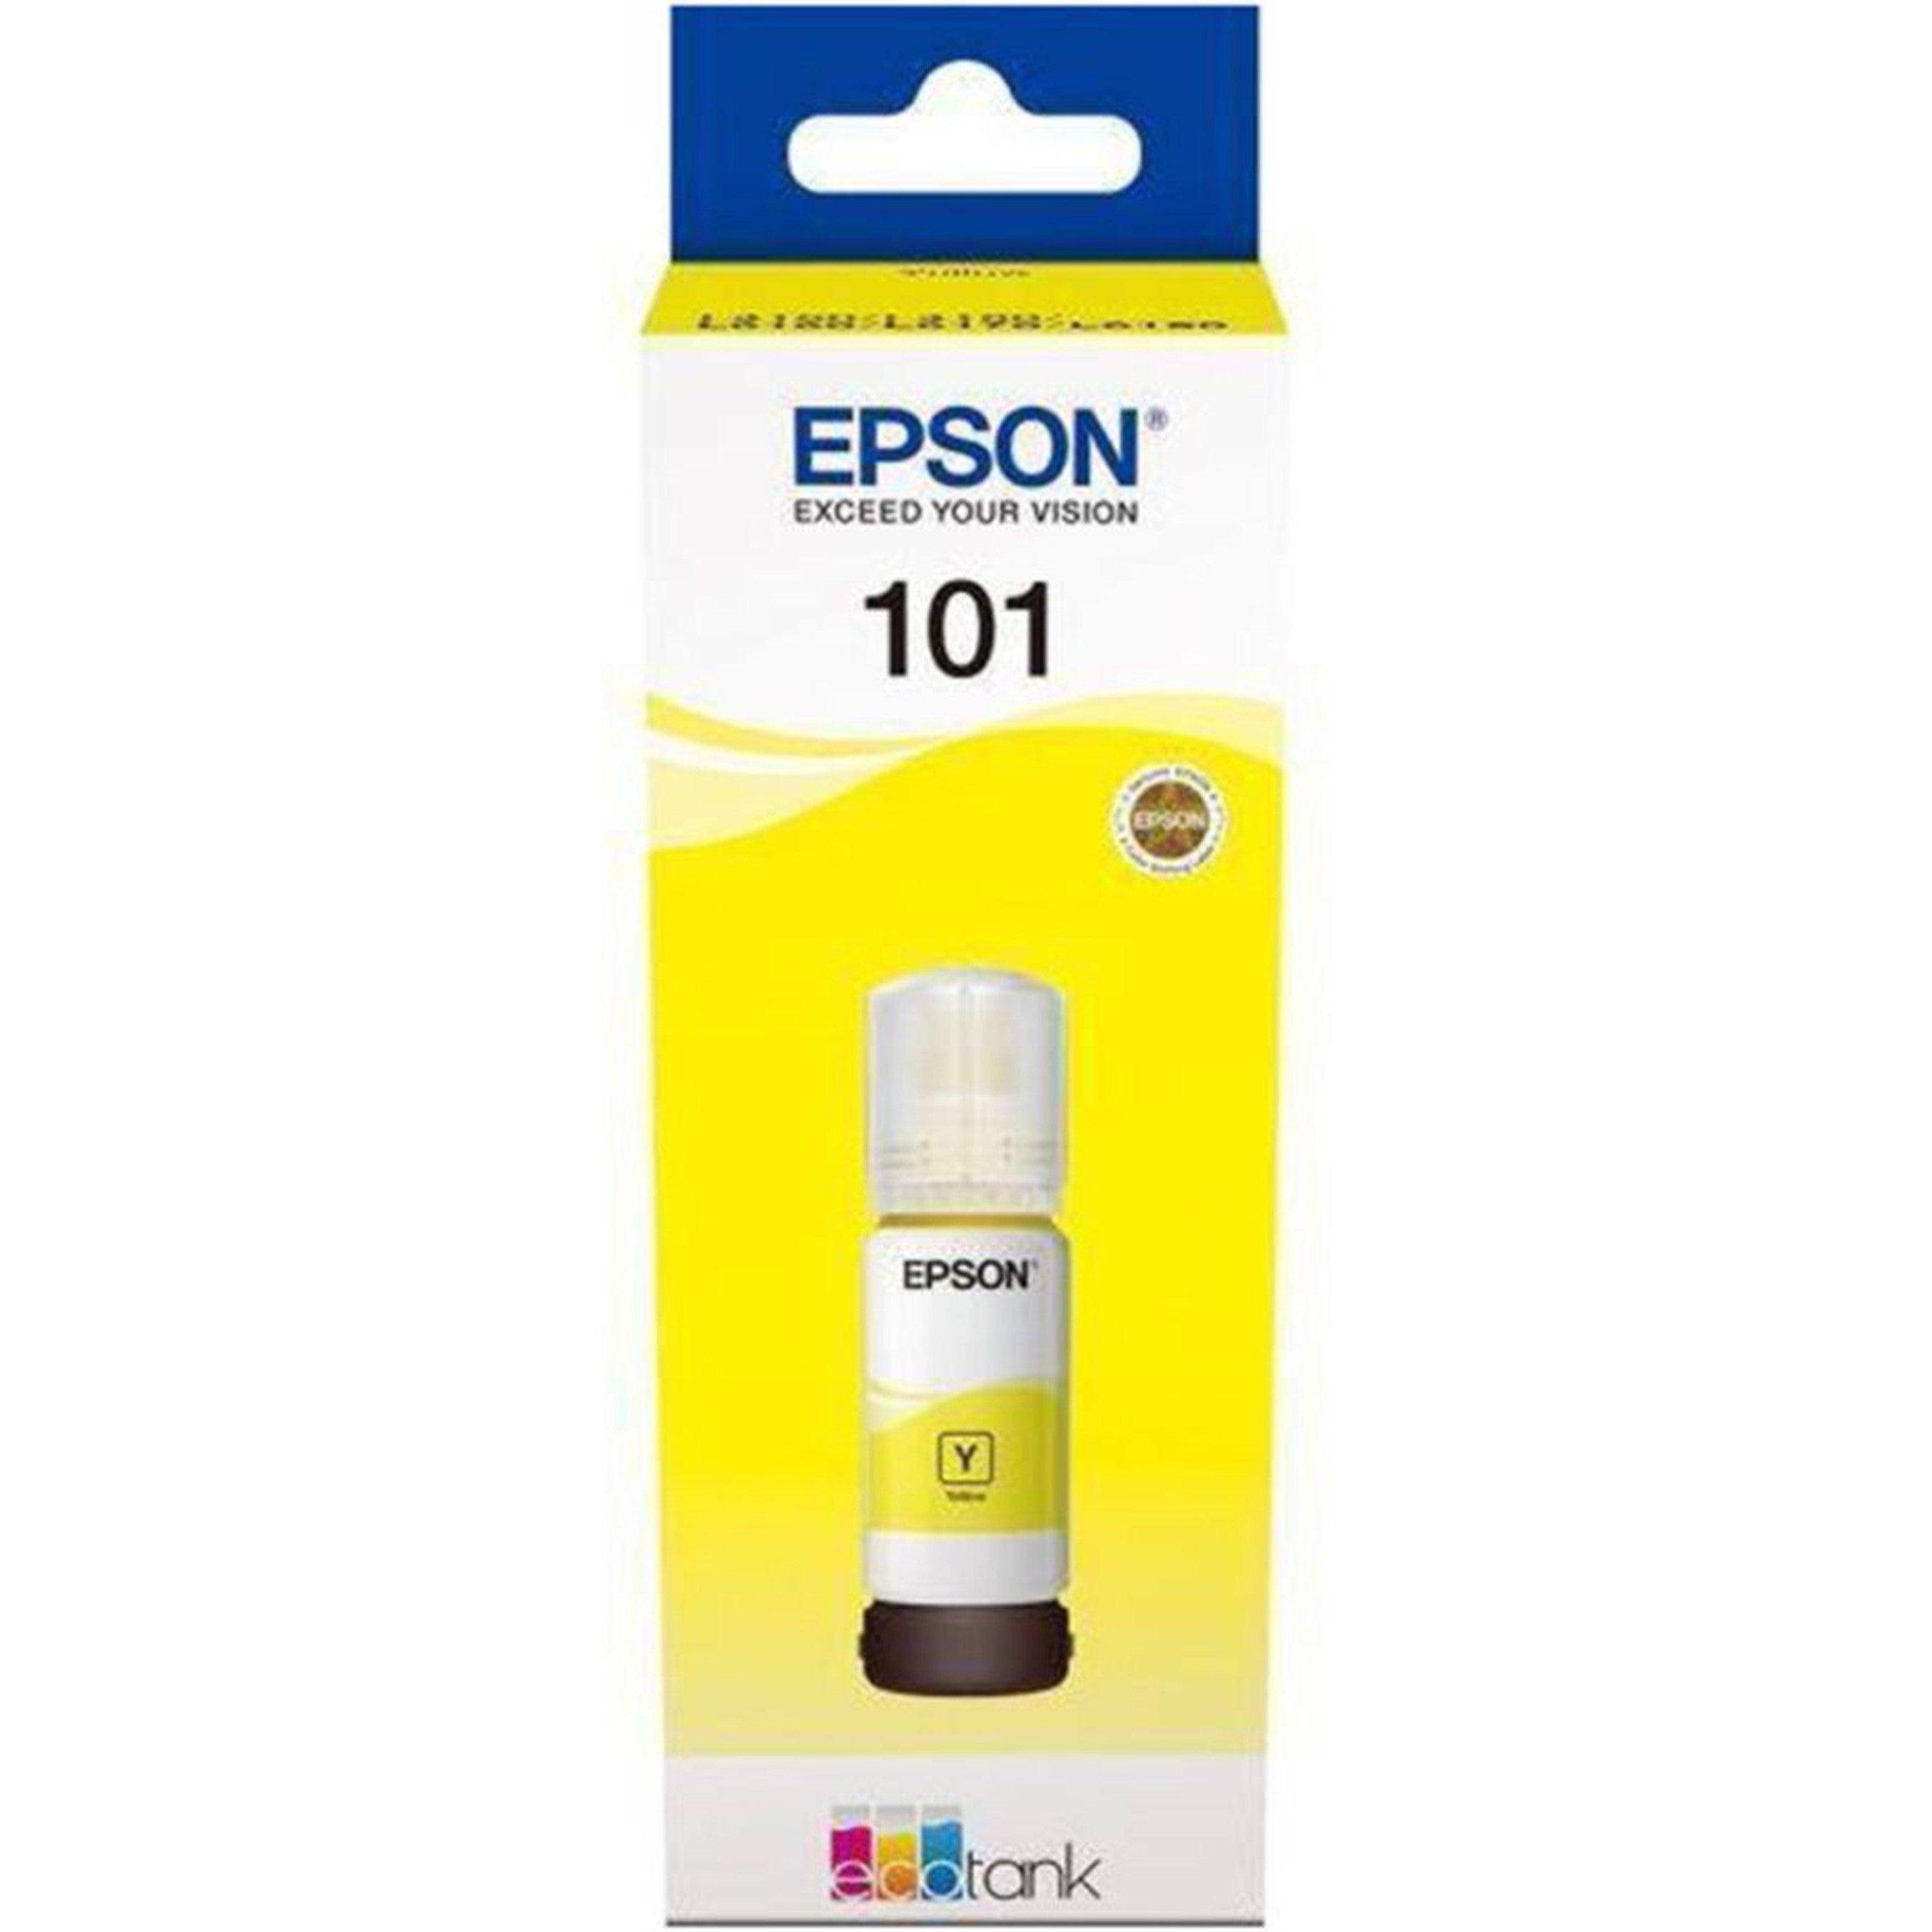 Epson 101 Yellow Ink Cartridge-Inks And Toners-Epson-Star Light Kuwait